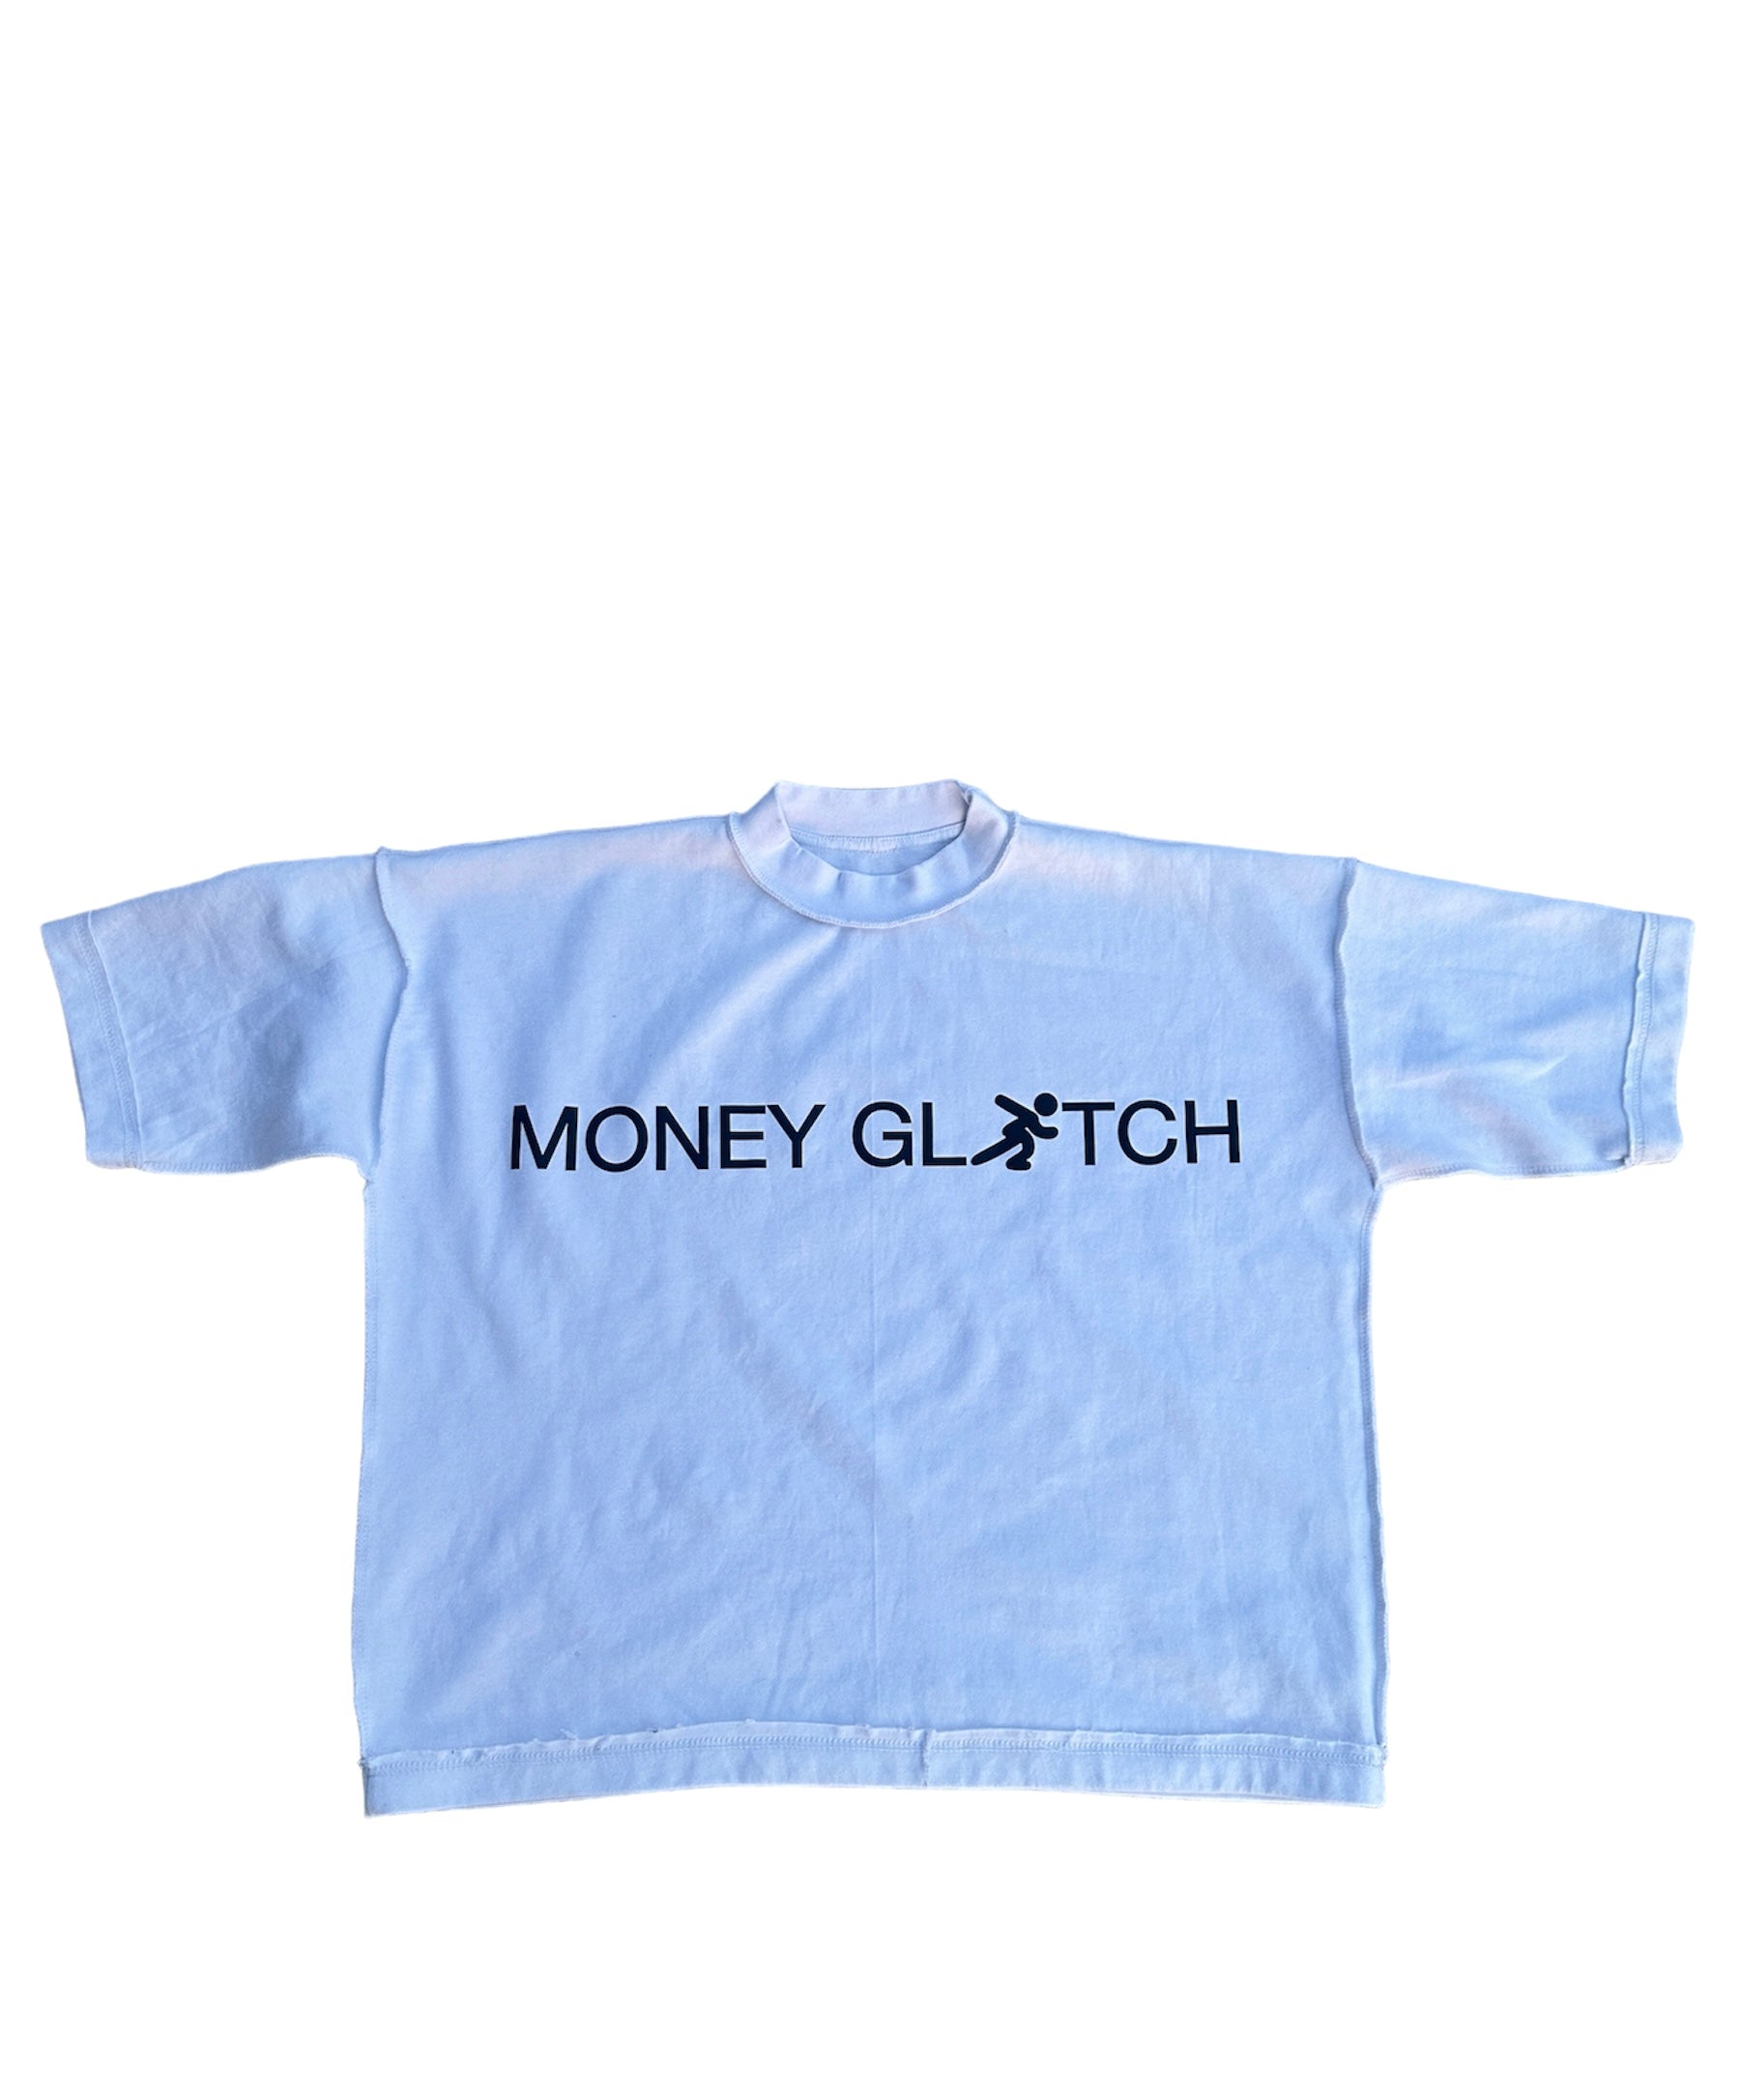 Money glitch tee